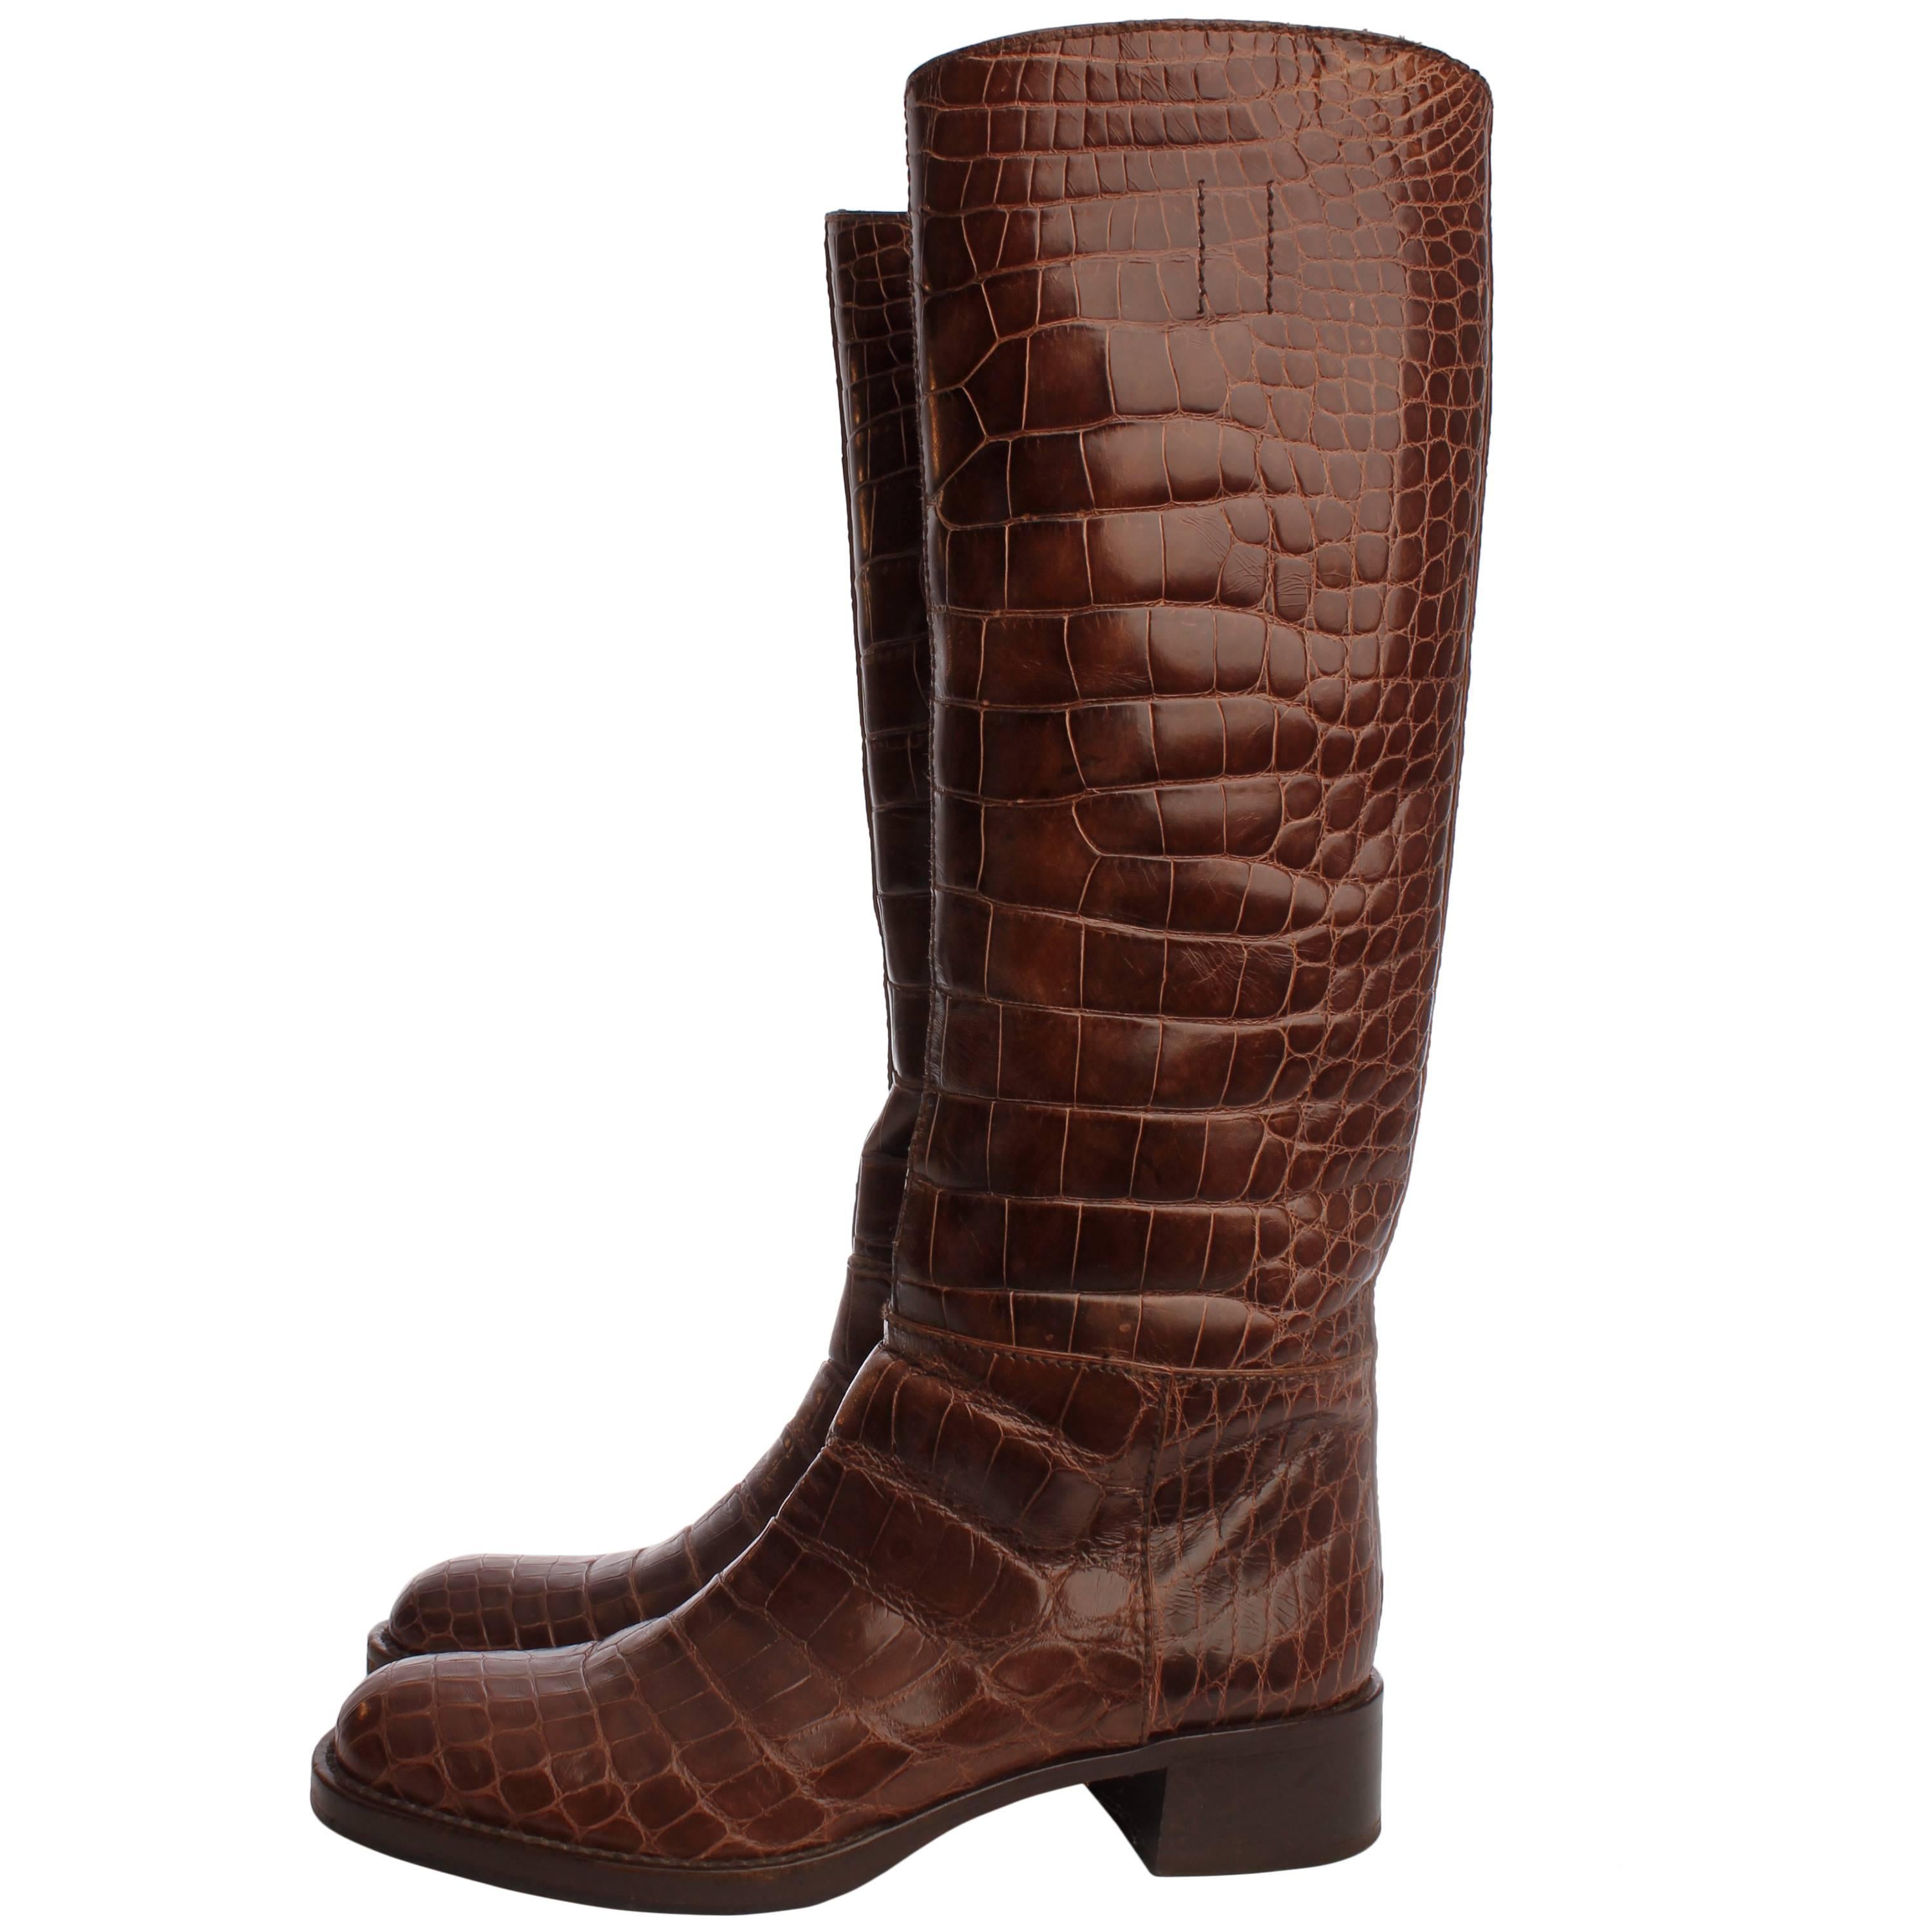 Prada Boots Crocodile Leather - brown